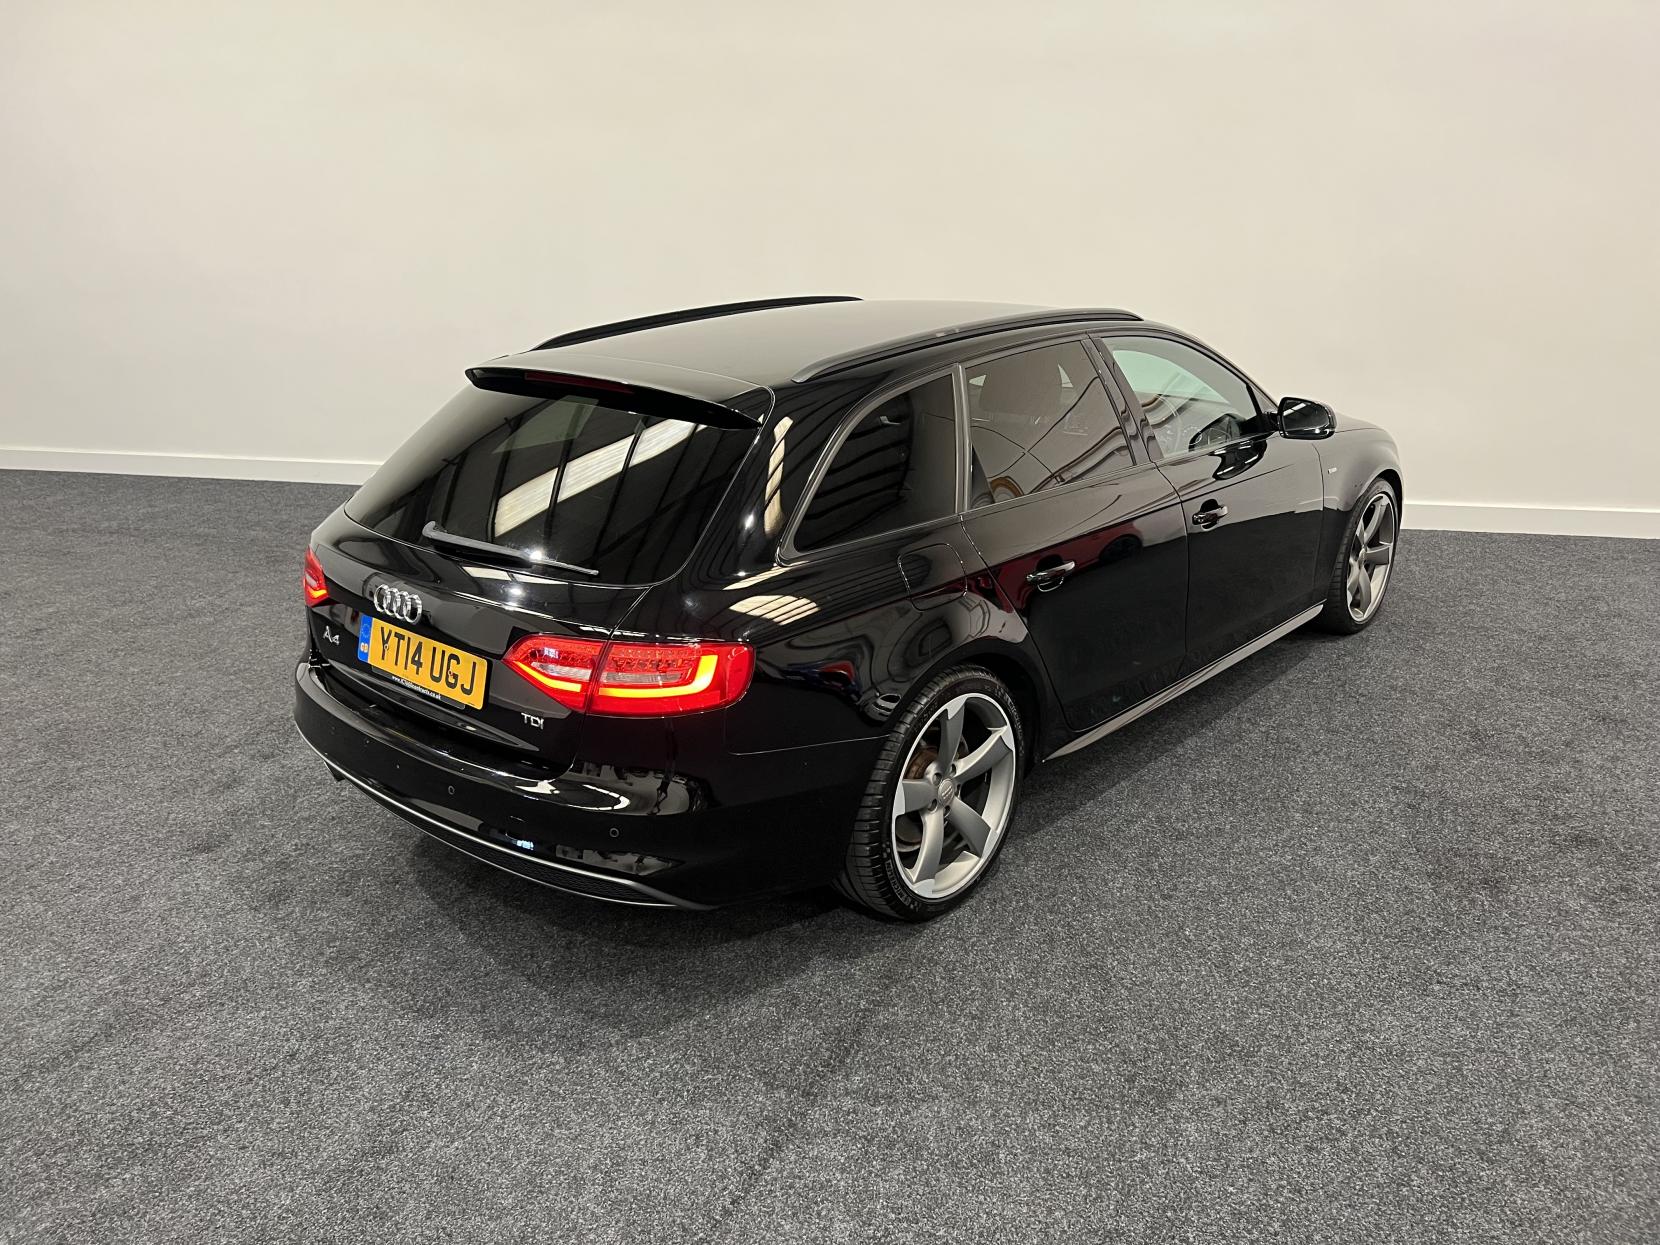 Audi A4 Avant 2.0 TDI Black Edition Estate 5dr Diesel Manual Euro 5 (s/s) (177 ps)